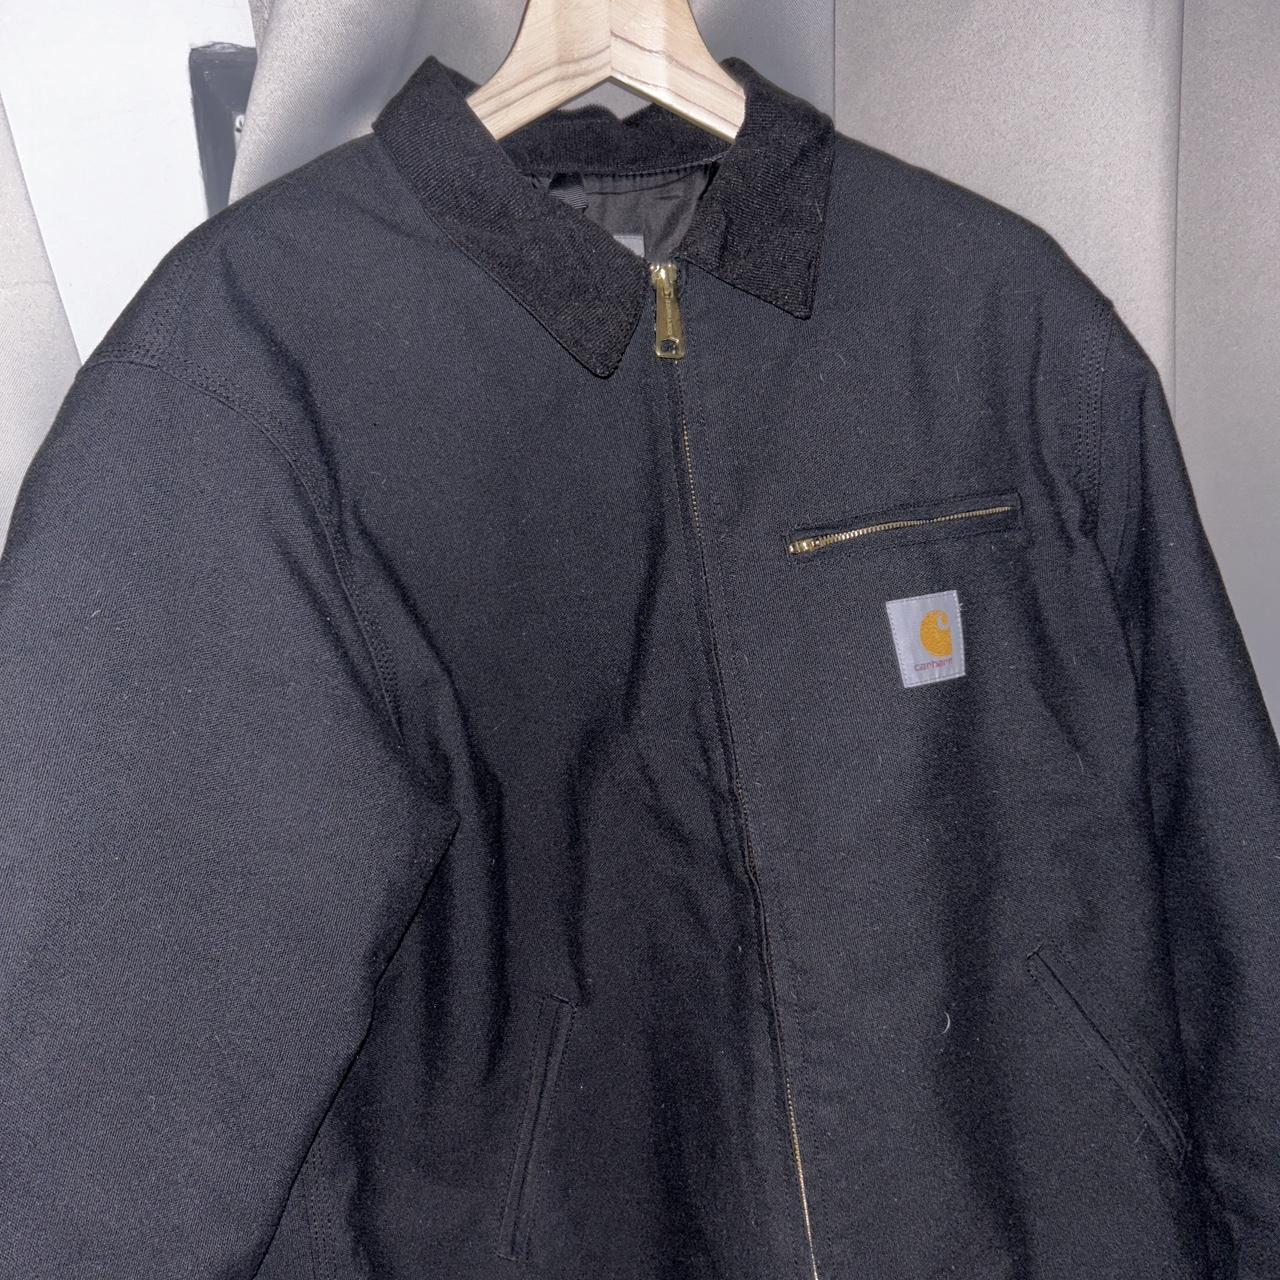 carhartt detroit jacket medium message before buying - Depop